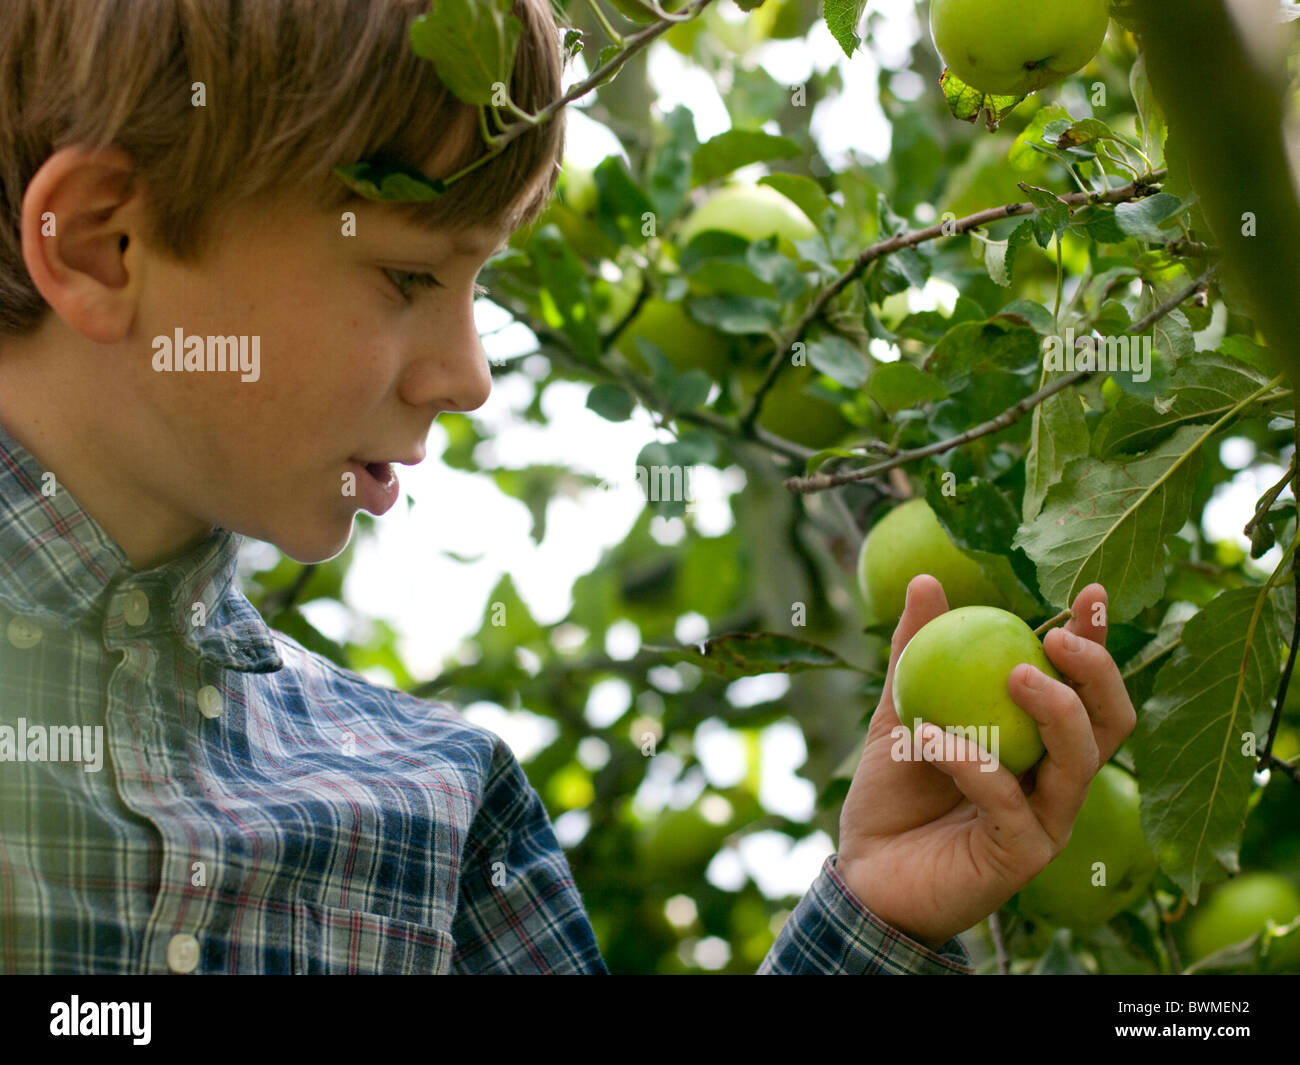 Ten year old climbs tree to pick apples in suburban garden Stock Photo